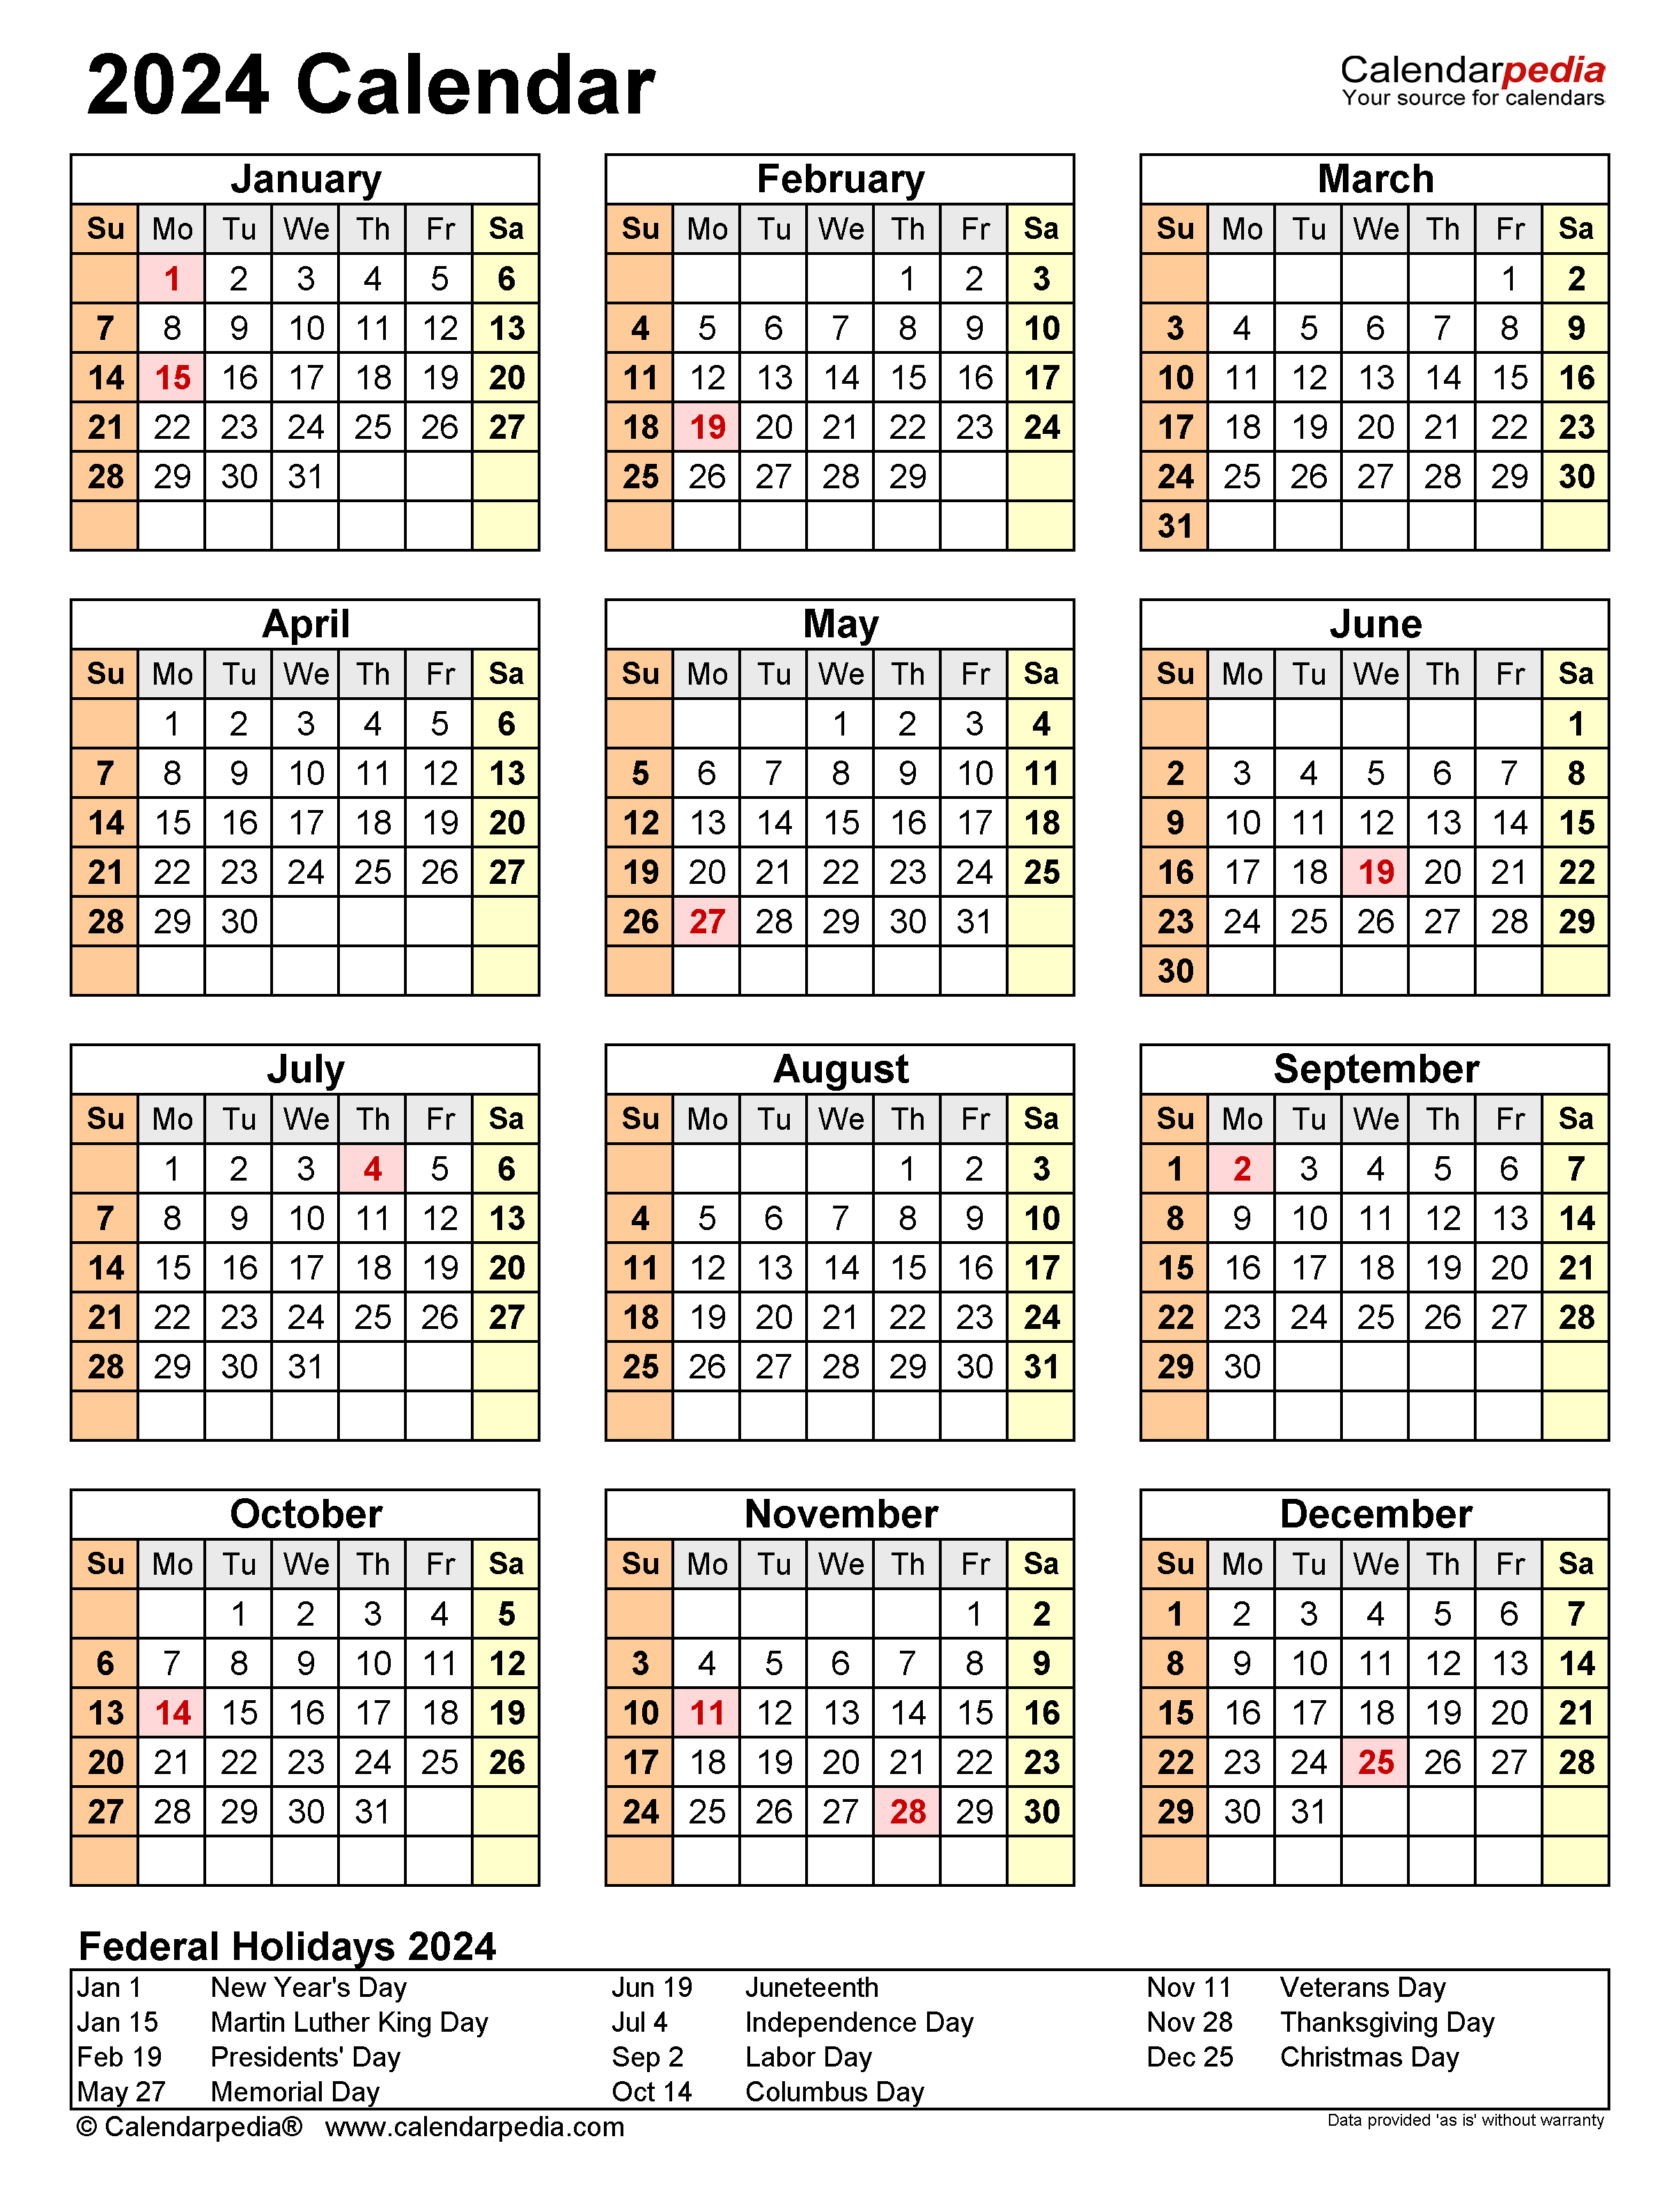 Free Printable 2024 Calendar With Holidays Crownflourmills - Free Printable 2024 Calendar With Holidays Ireland